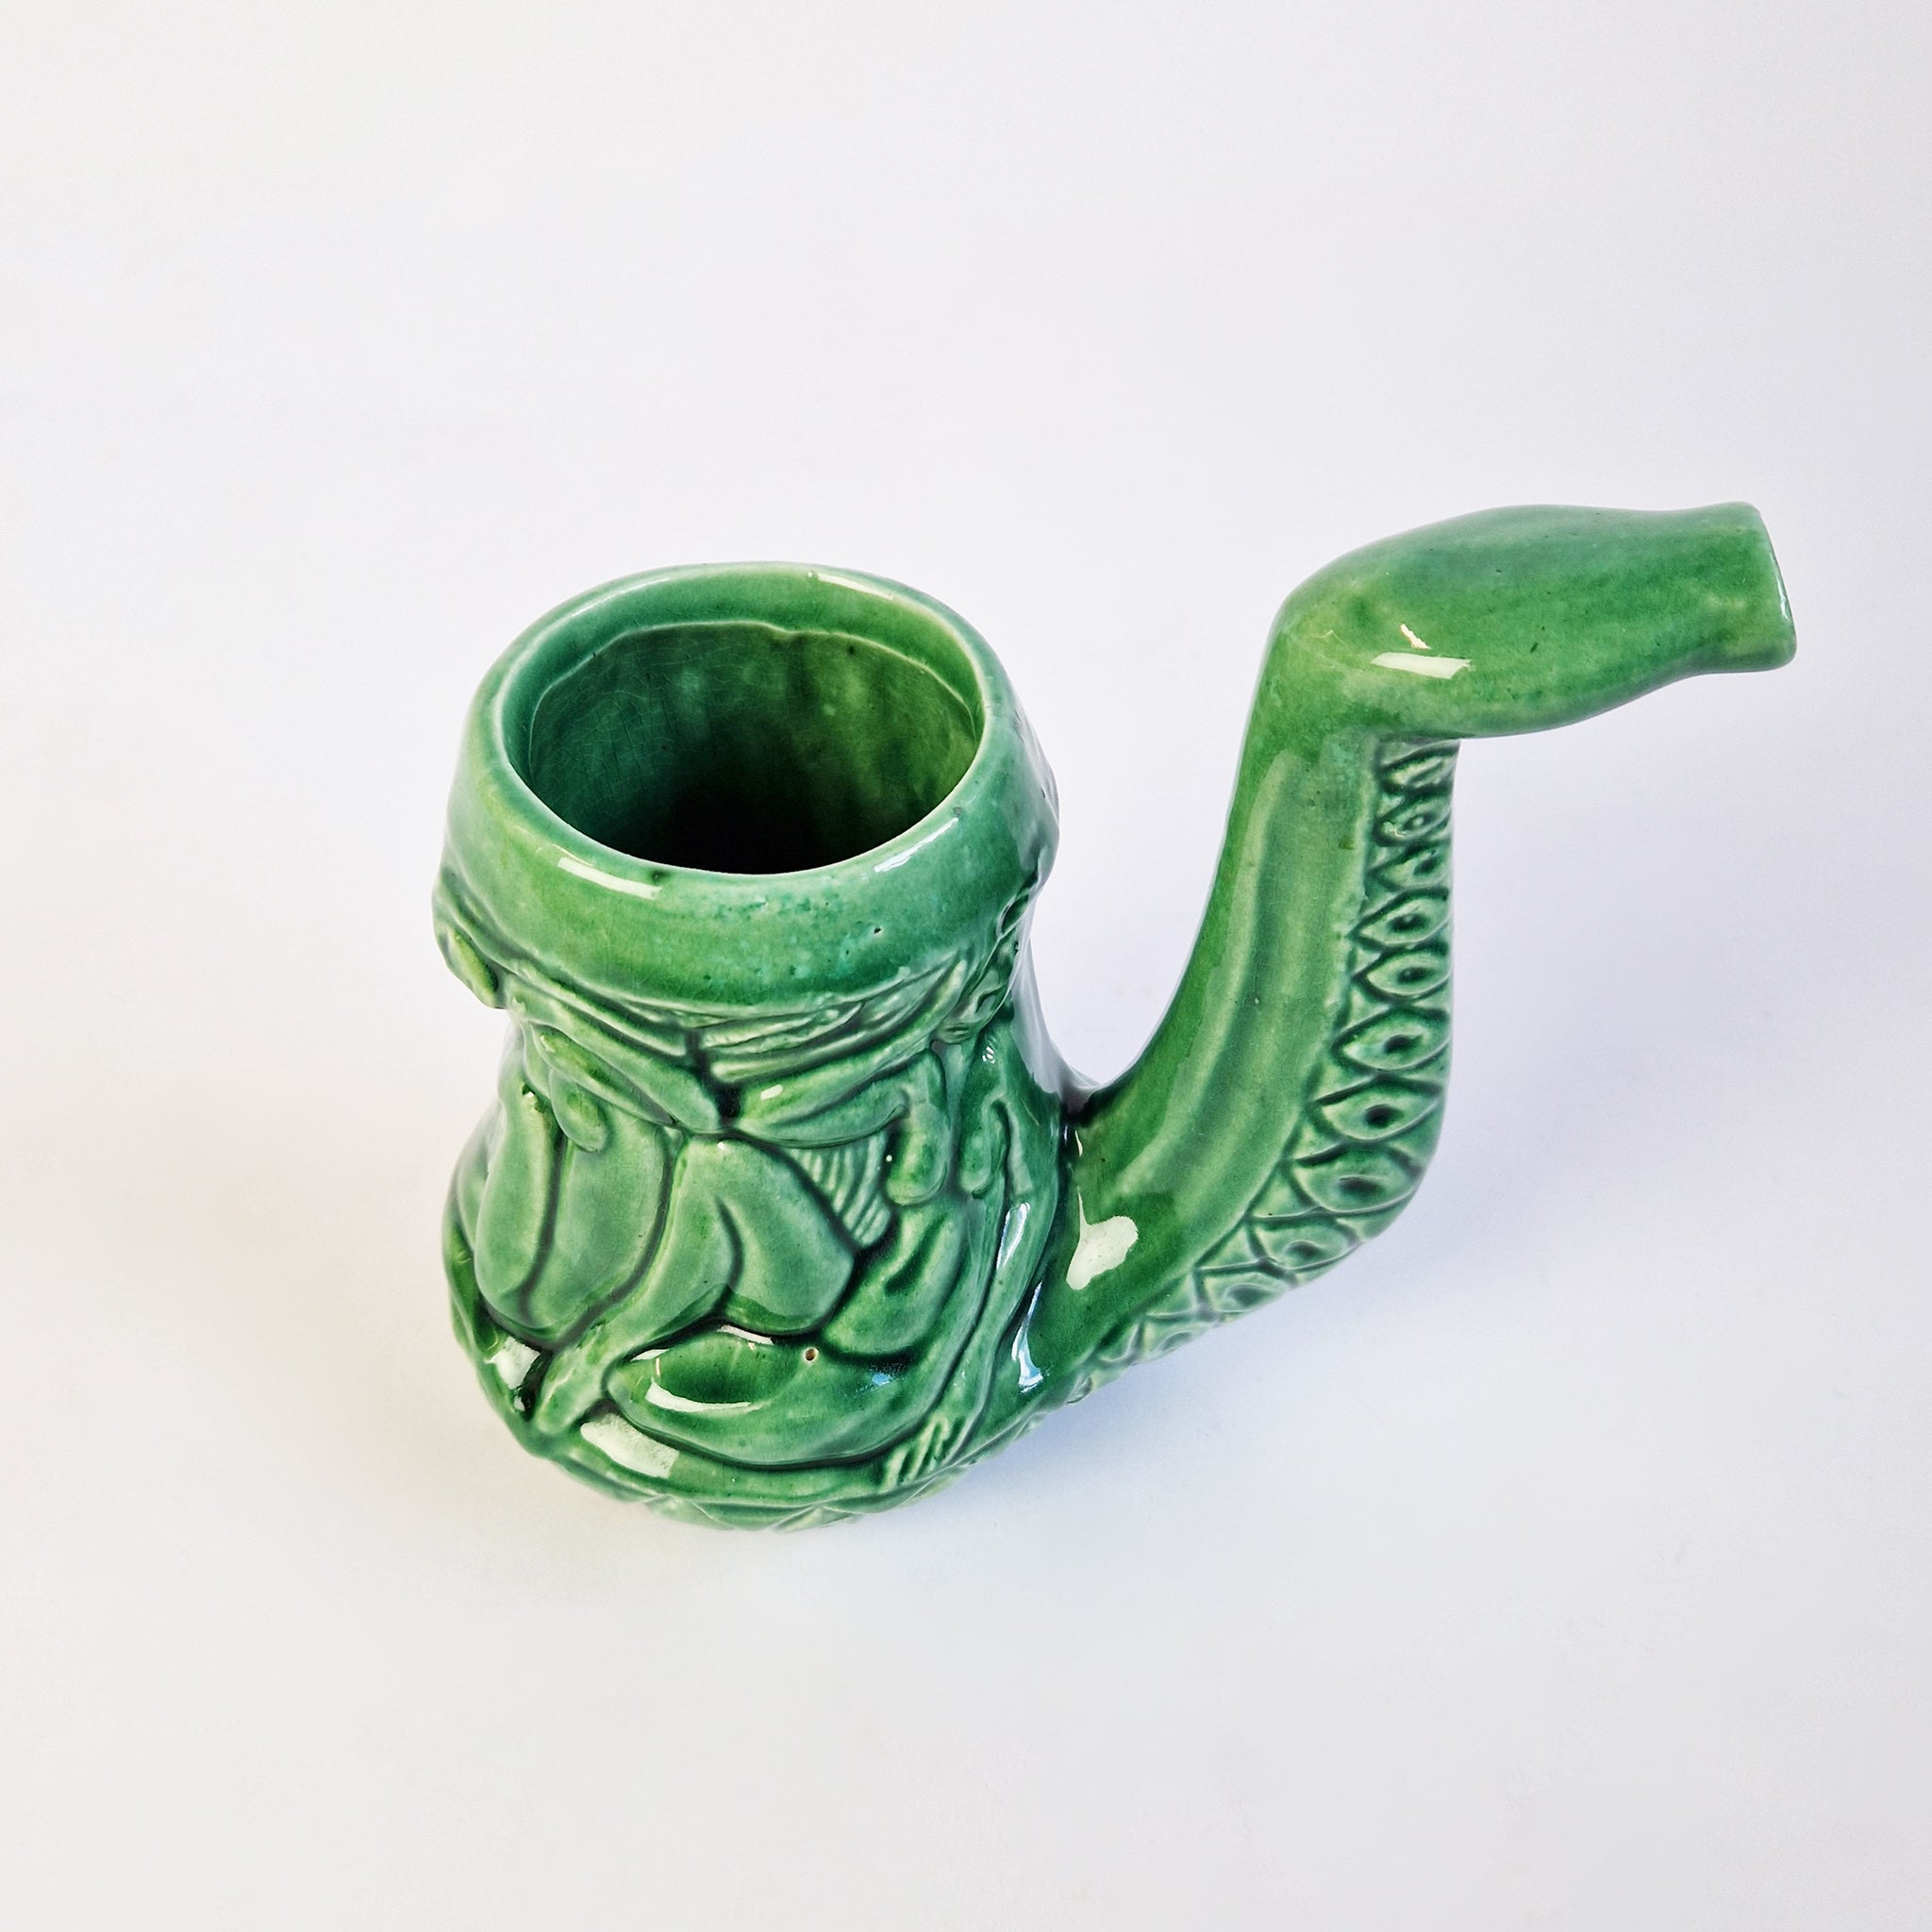 Vintage ceramic green vase